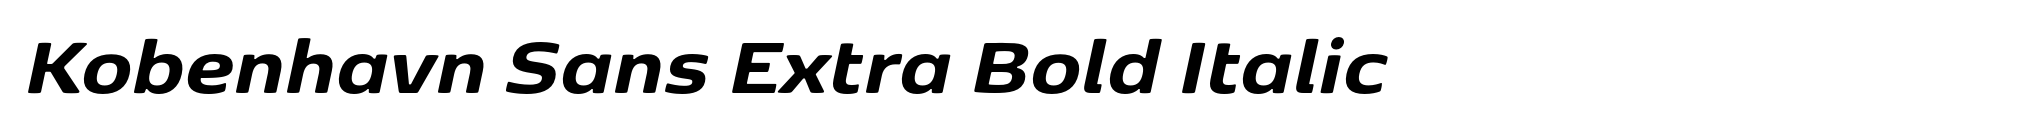 Kobenhavn Sans Extra Bold Italic image